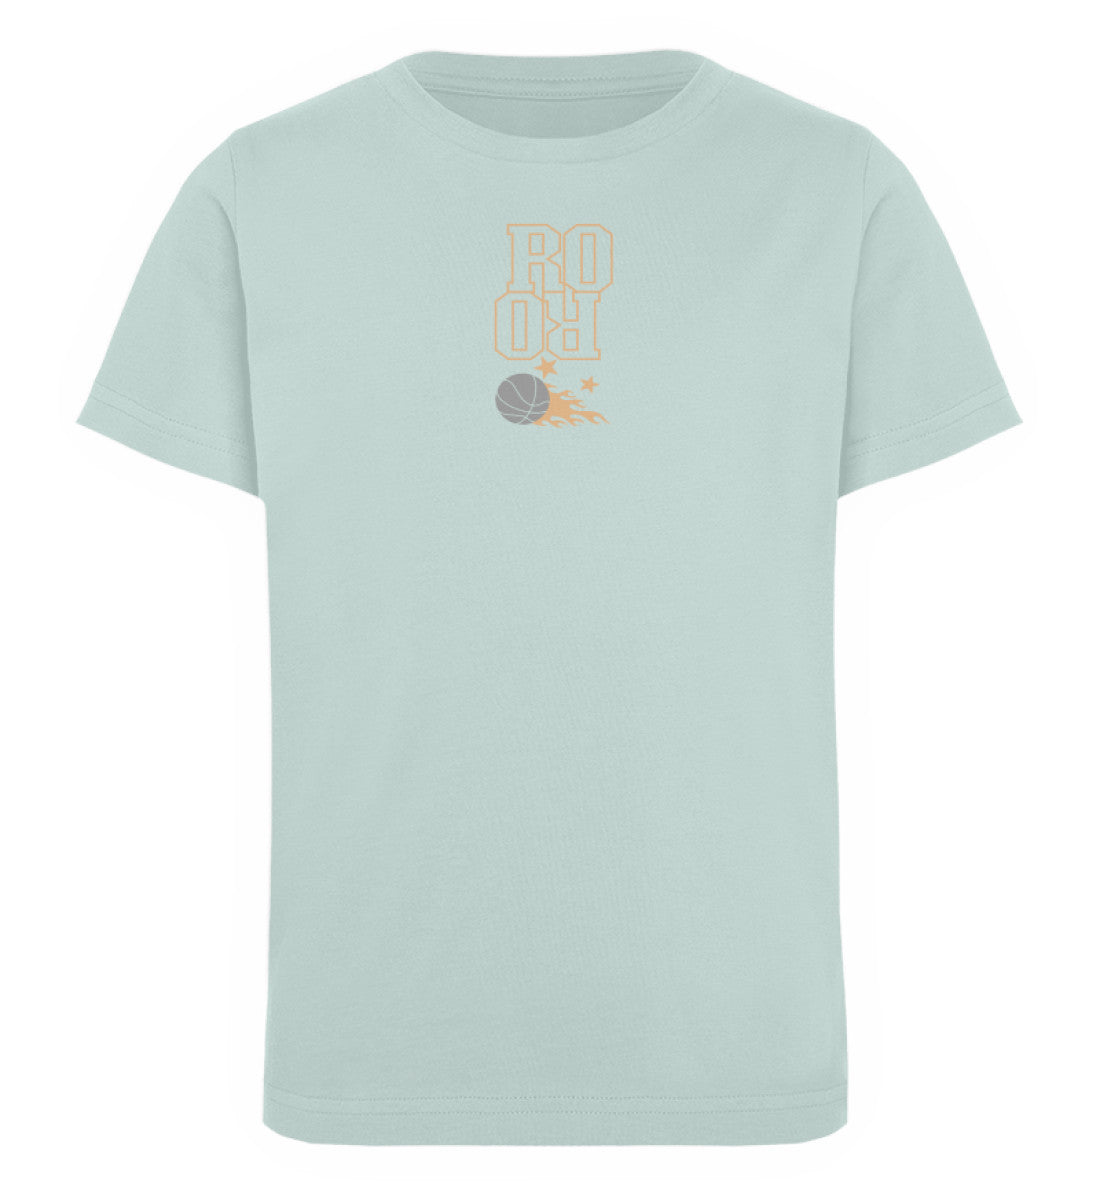 Carribean Blue Kinder T-Shirt für Mädchen und Jungen bedruckt mit dem Design der Roger Rockawoo Kollektion Basketball Streetball Buzzer Beater